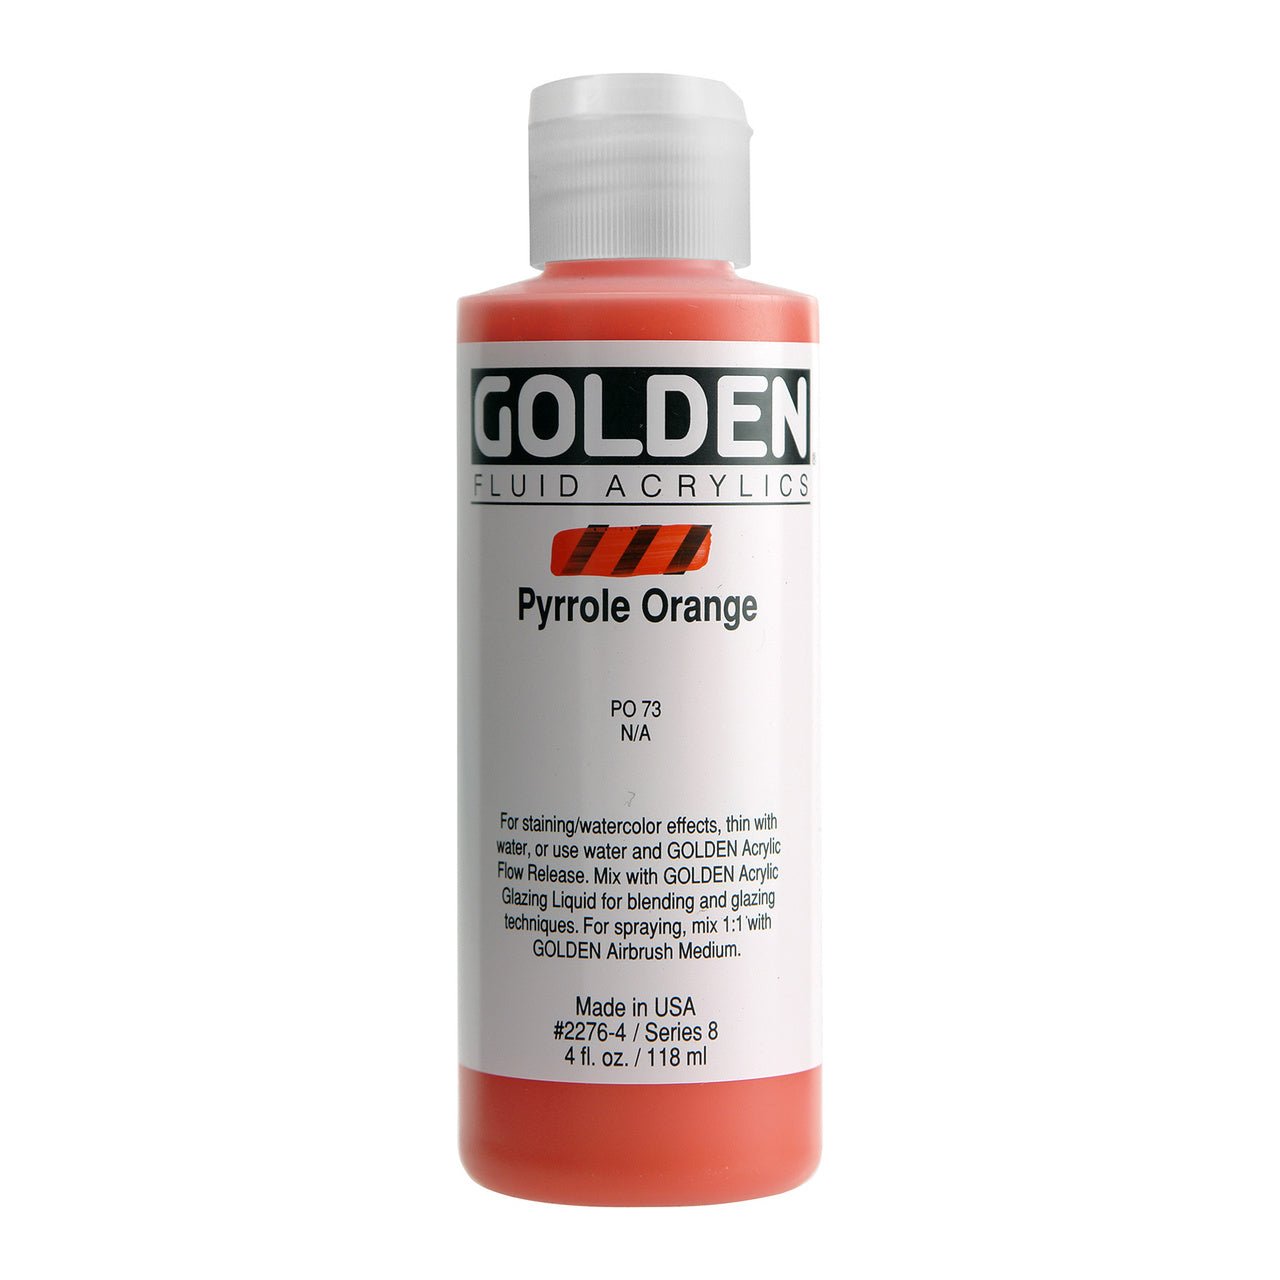 Golden Fluid Acrylic Pyrrole Orange 4 oz - merriartist.com